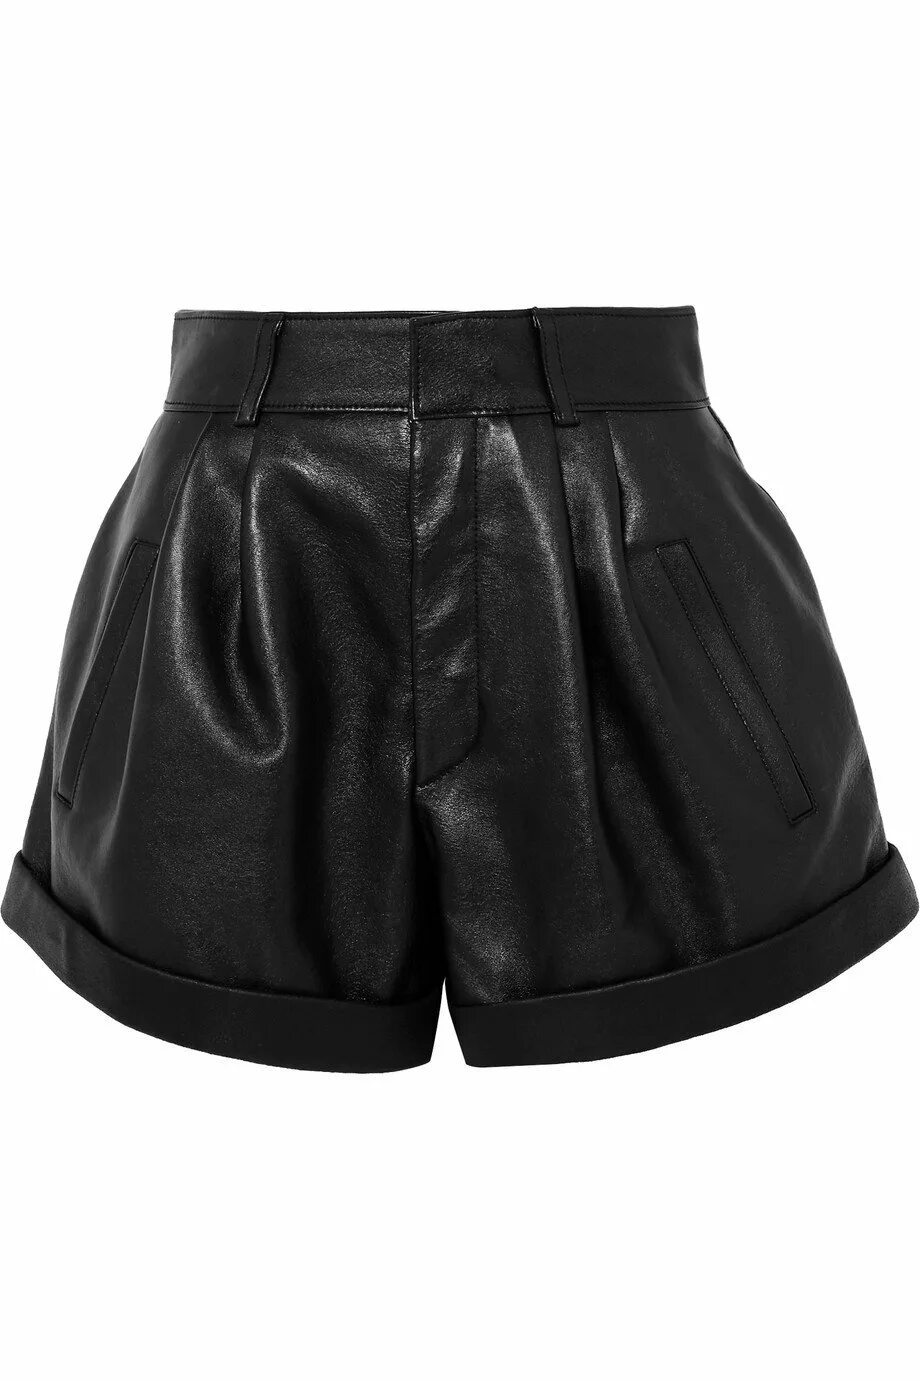 Short like. Шорты кожа Марк Джейкобс. Marc by Marc Jacobs кожаные шорты. Кожаные шорты женские. Черные кожаные шорты.